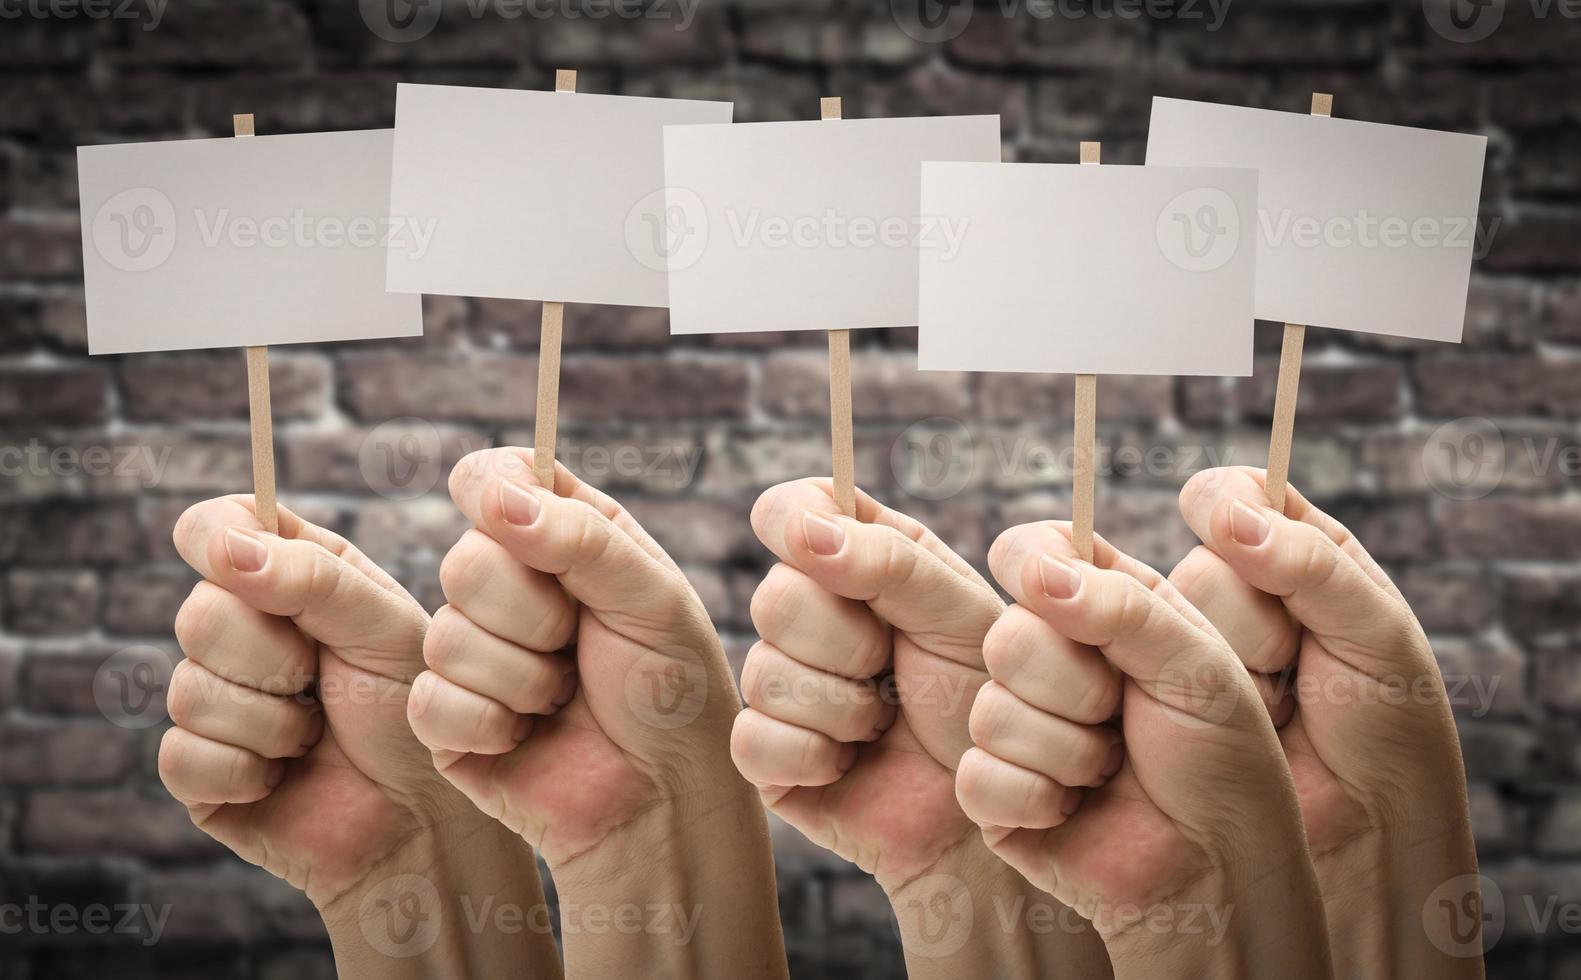 vijf mannetje handen Holding blanco tekens tegen oud steen muur foto